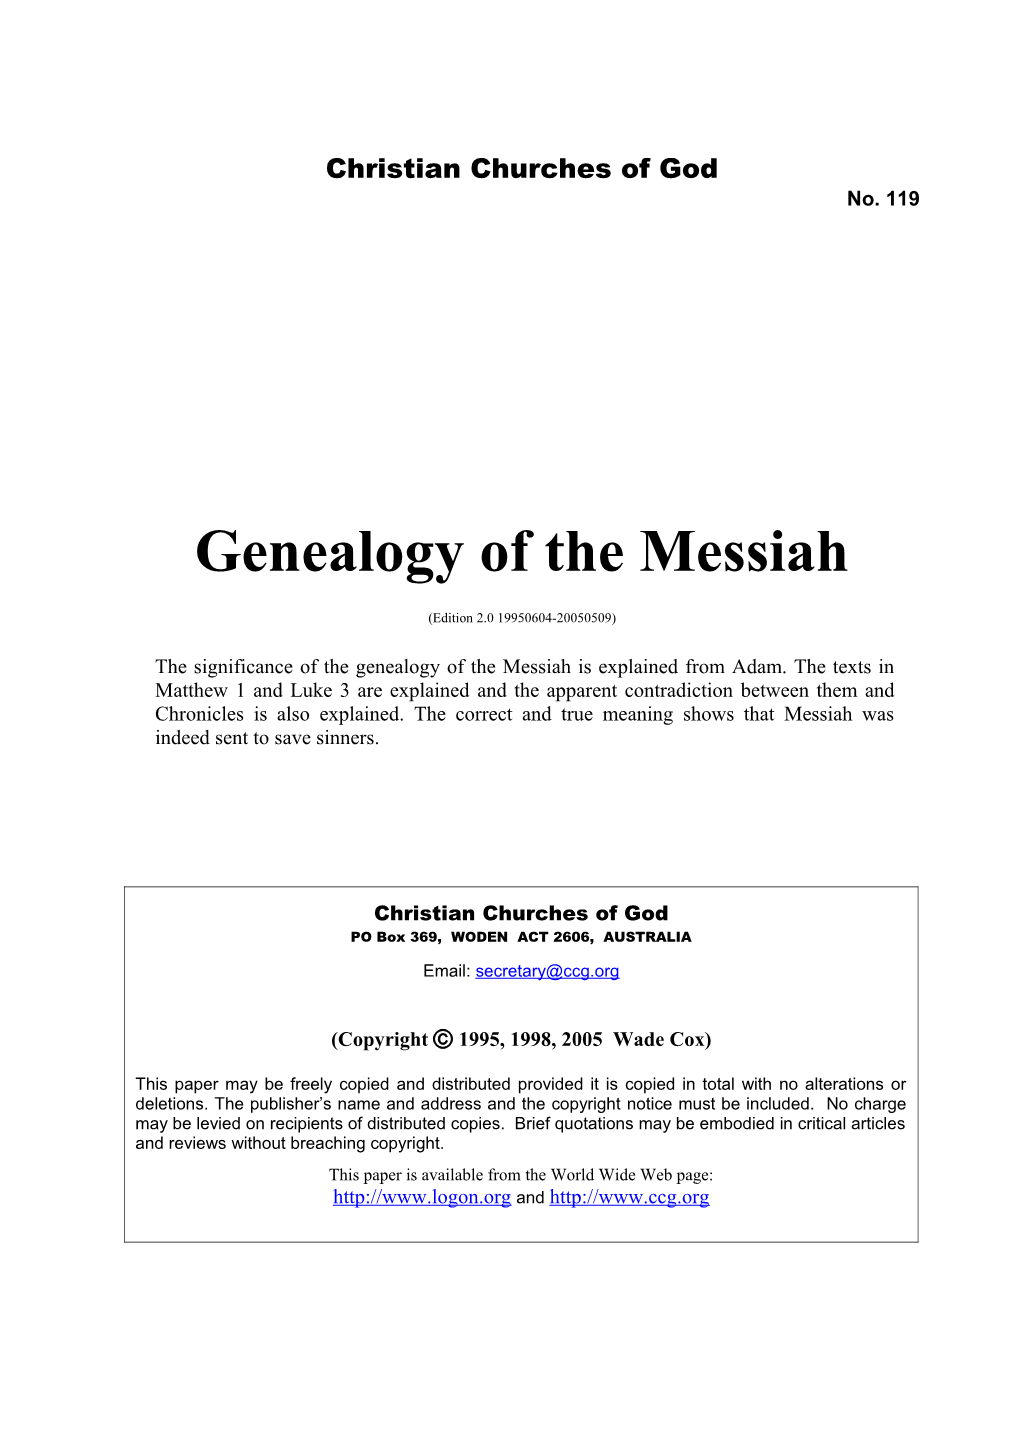 Genealogy of the Messiah (No. 119)